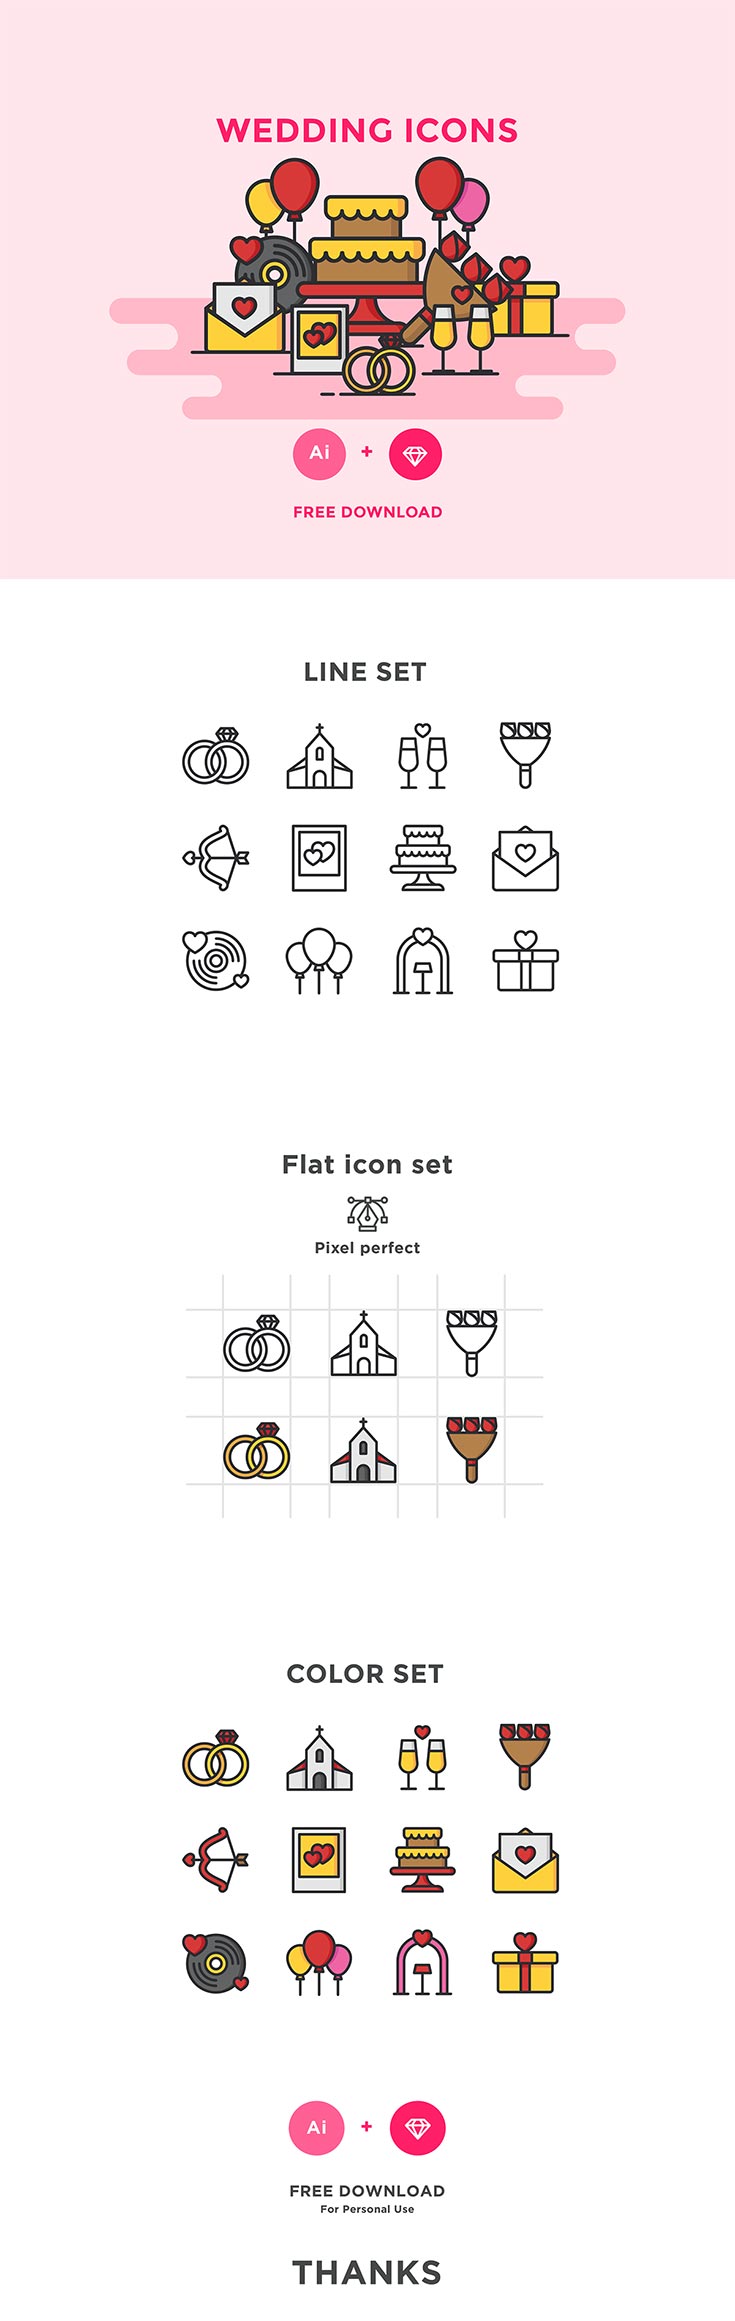 Free Wedding Vector Icons Set